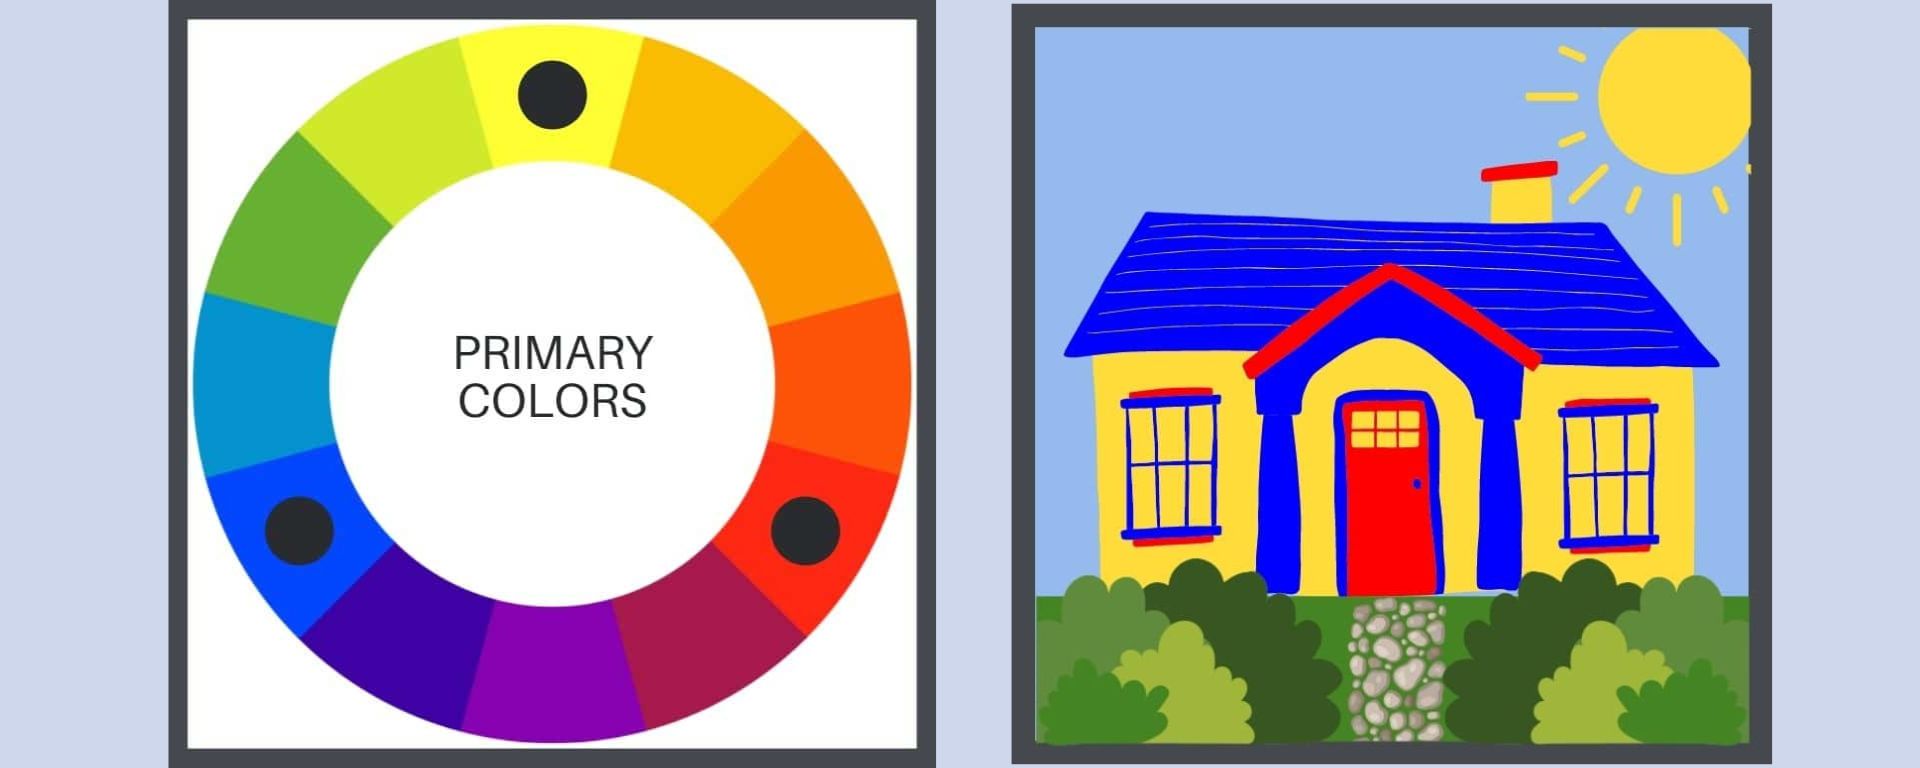 choosing-bungalow-colors-lesson-primary